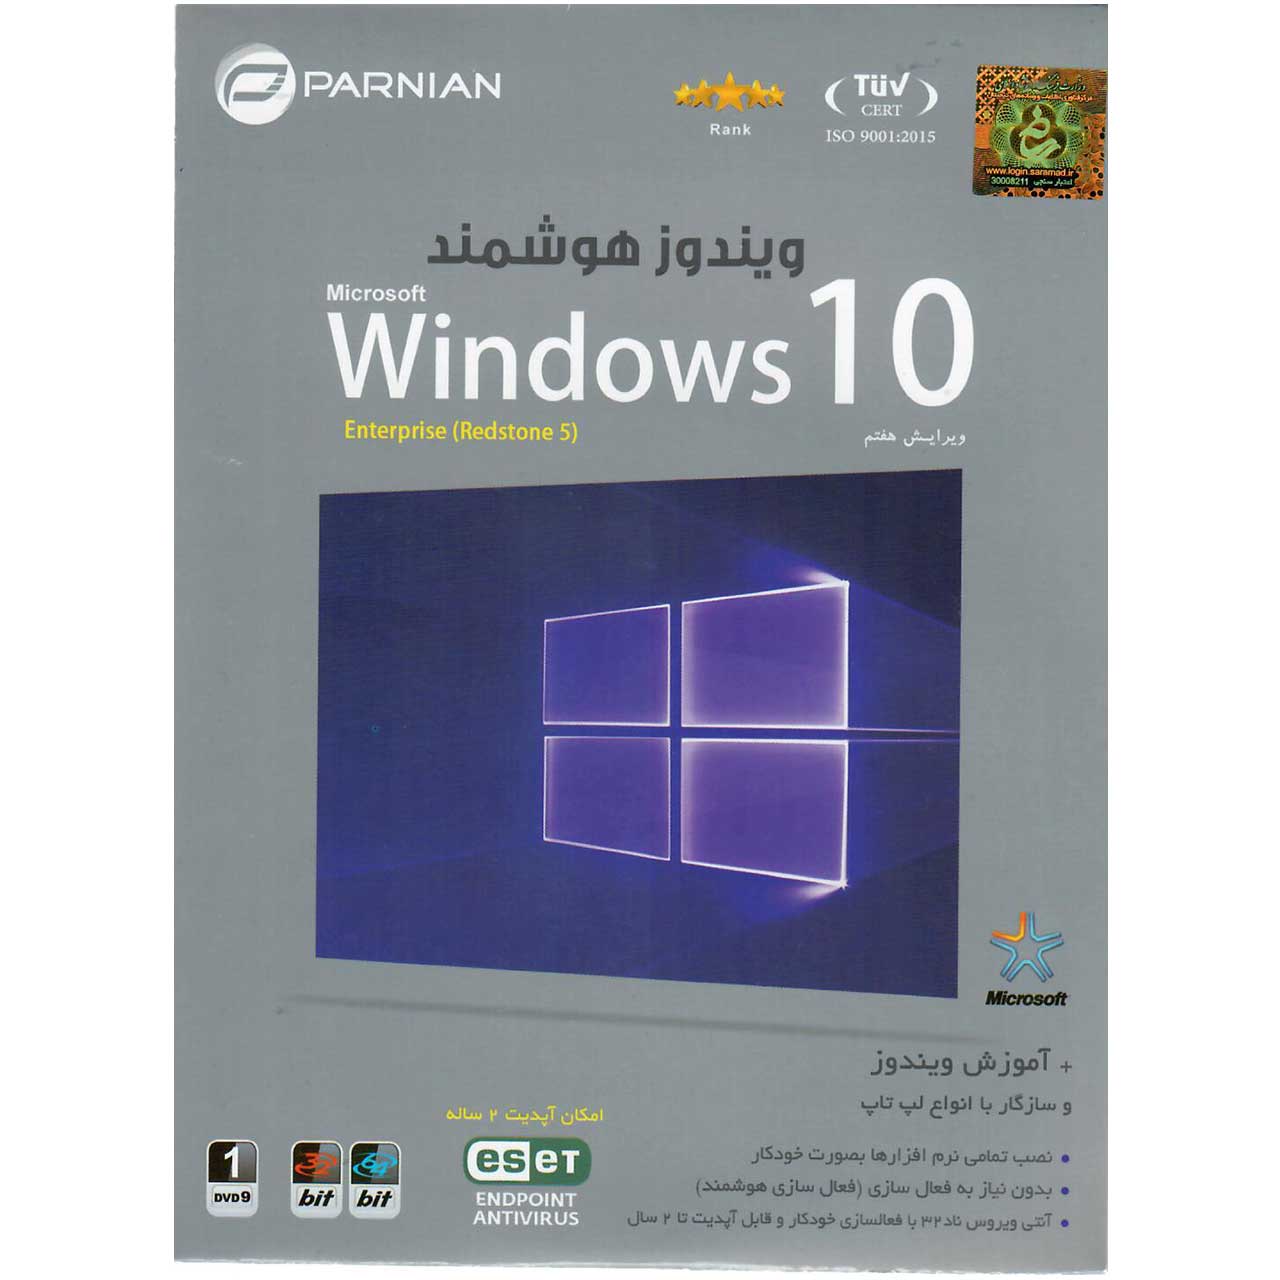 سیستم عامل windows 10 Redstone 5  نشر پرنیان